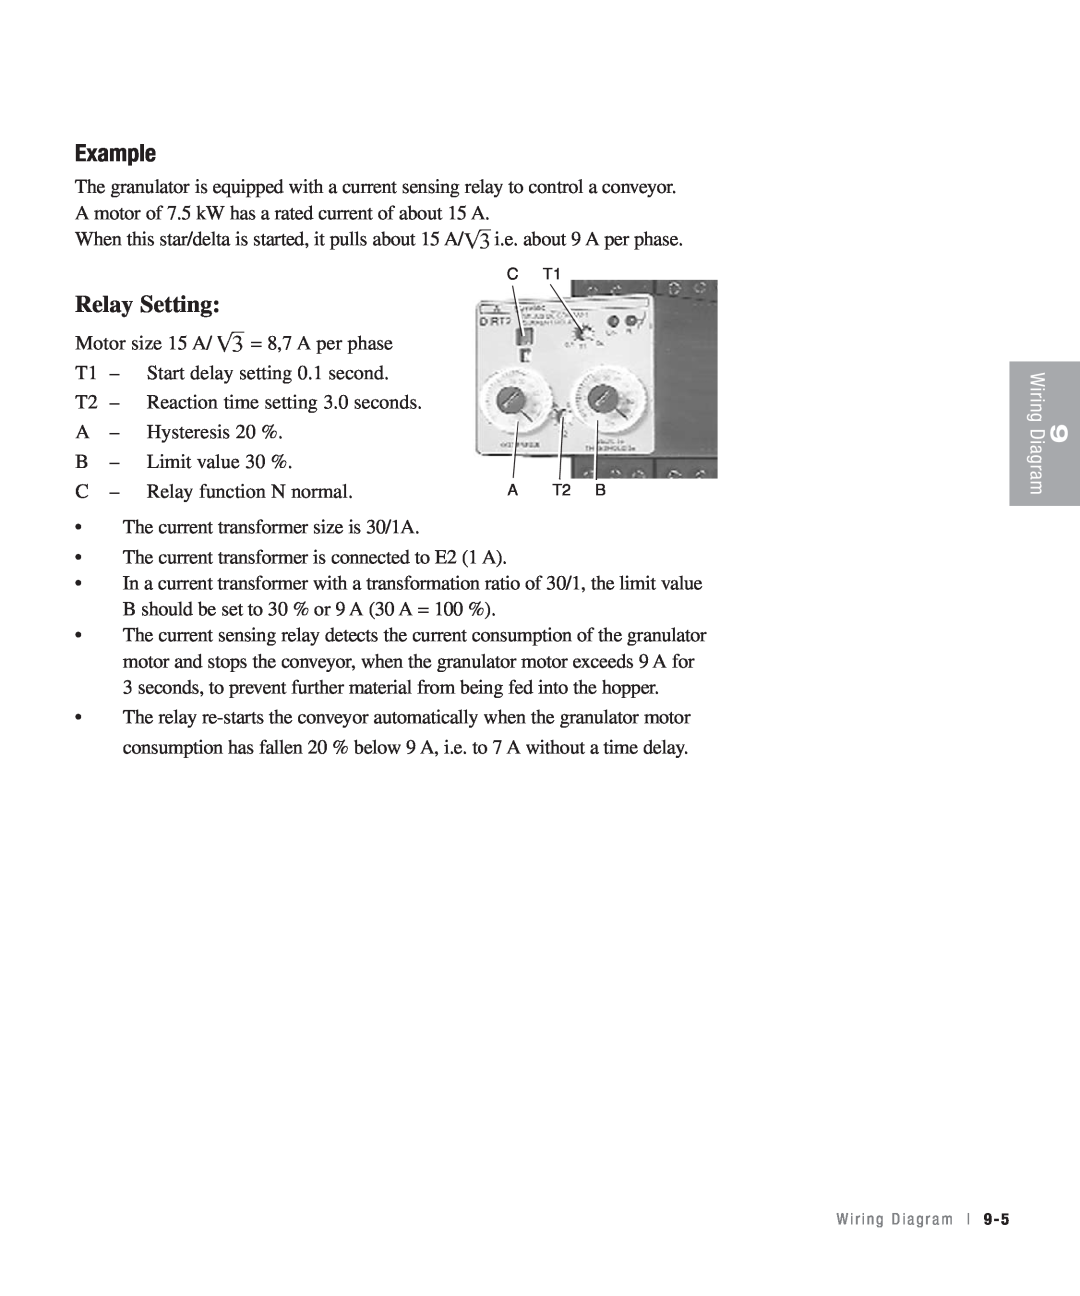 Conair CHS-810 manual Example, Relay Setting, Wiring Diagram 